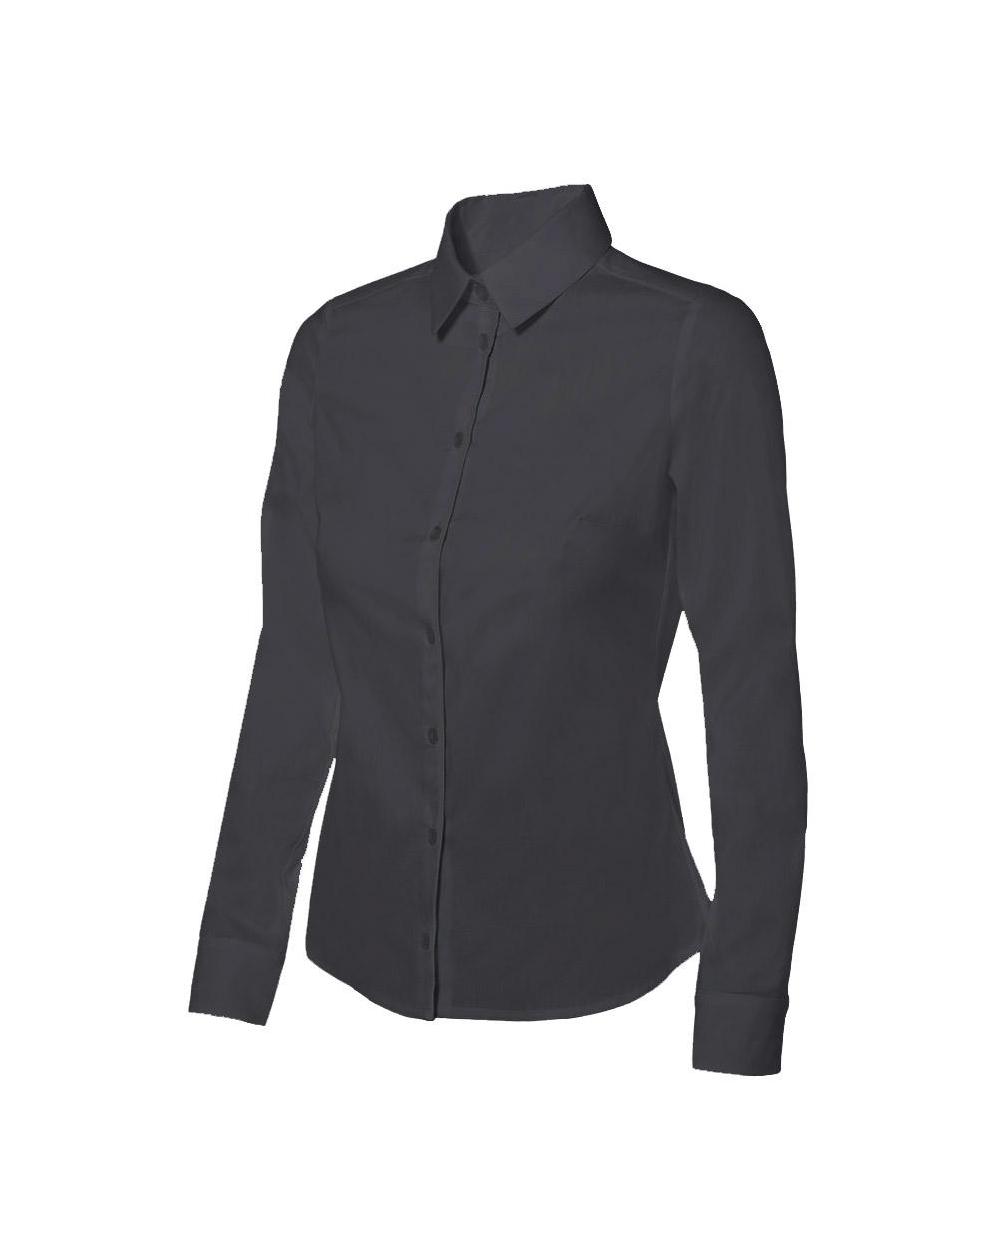 Comprar Camisa stretch mujer serie 405002 online barato Negro